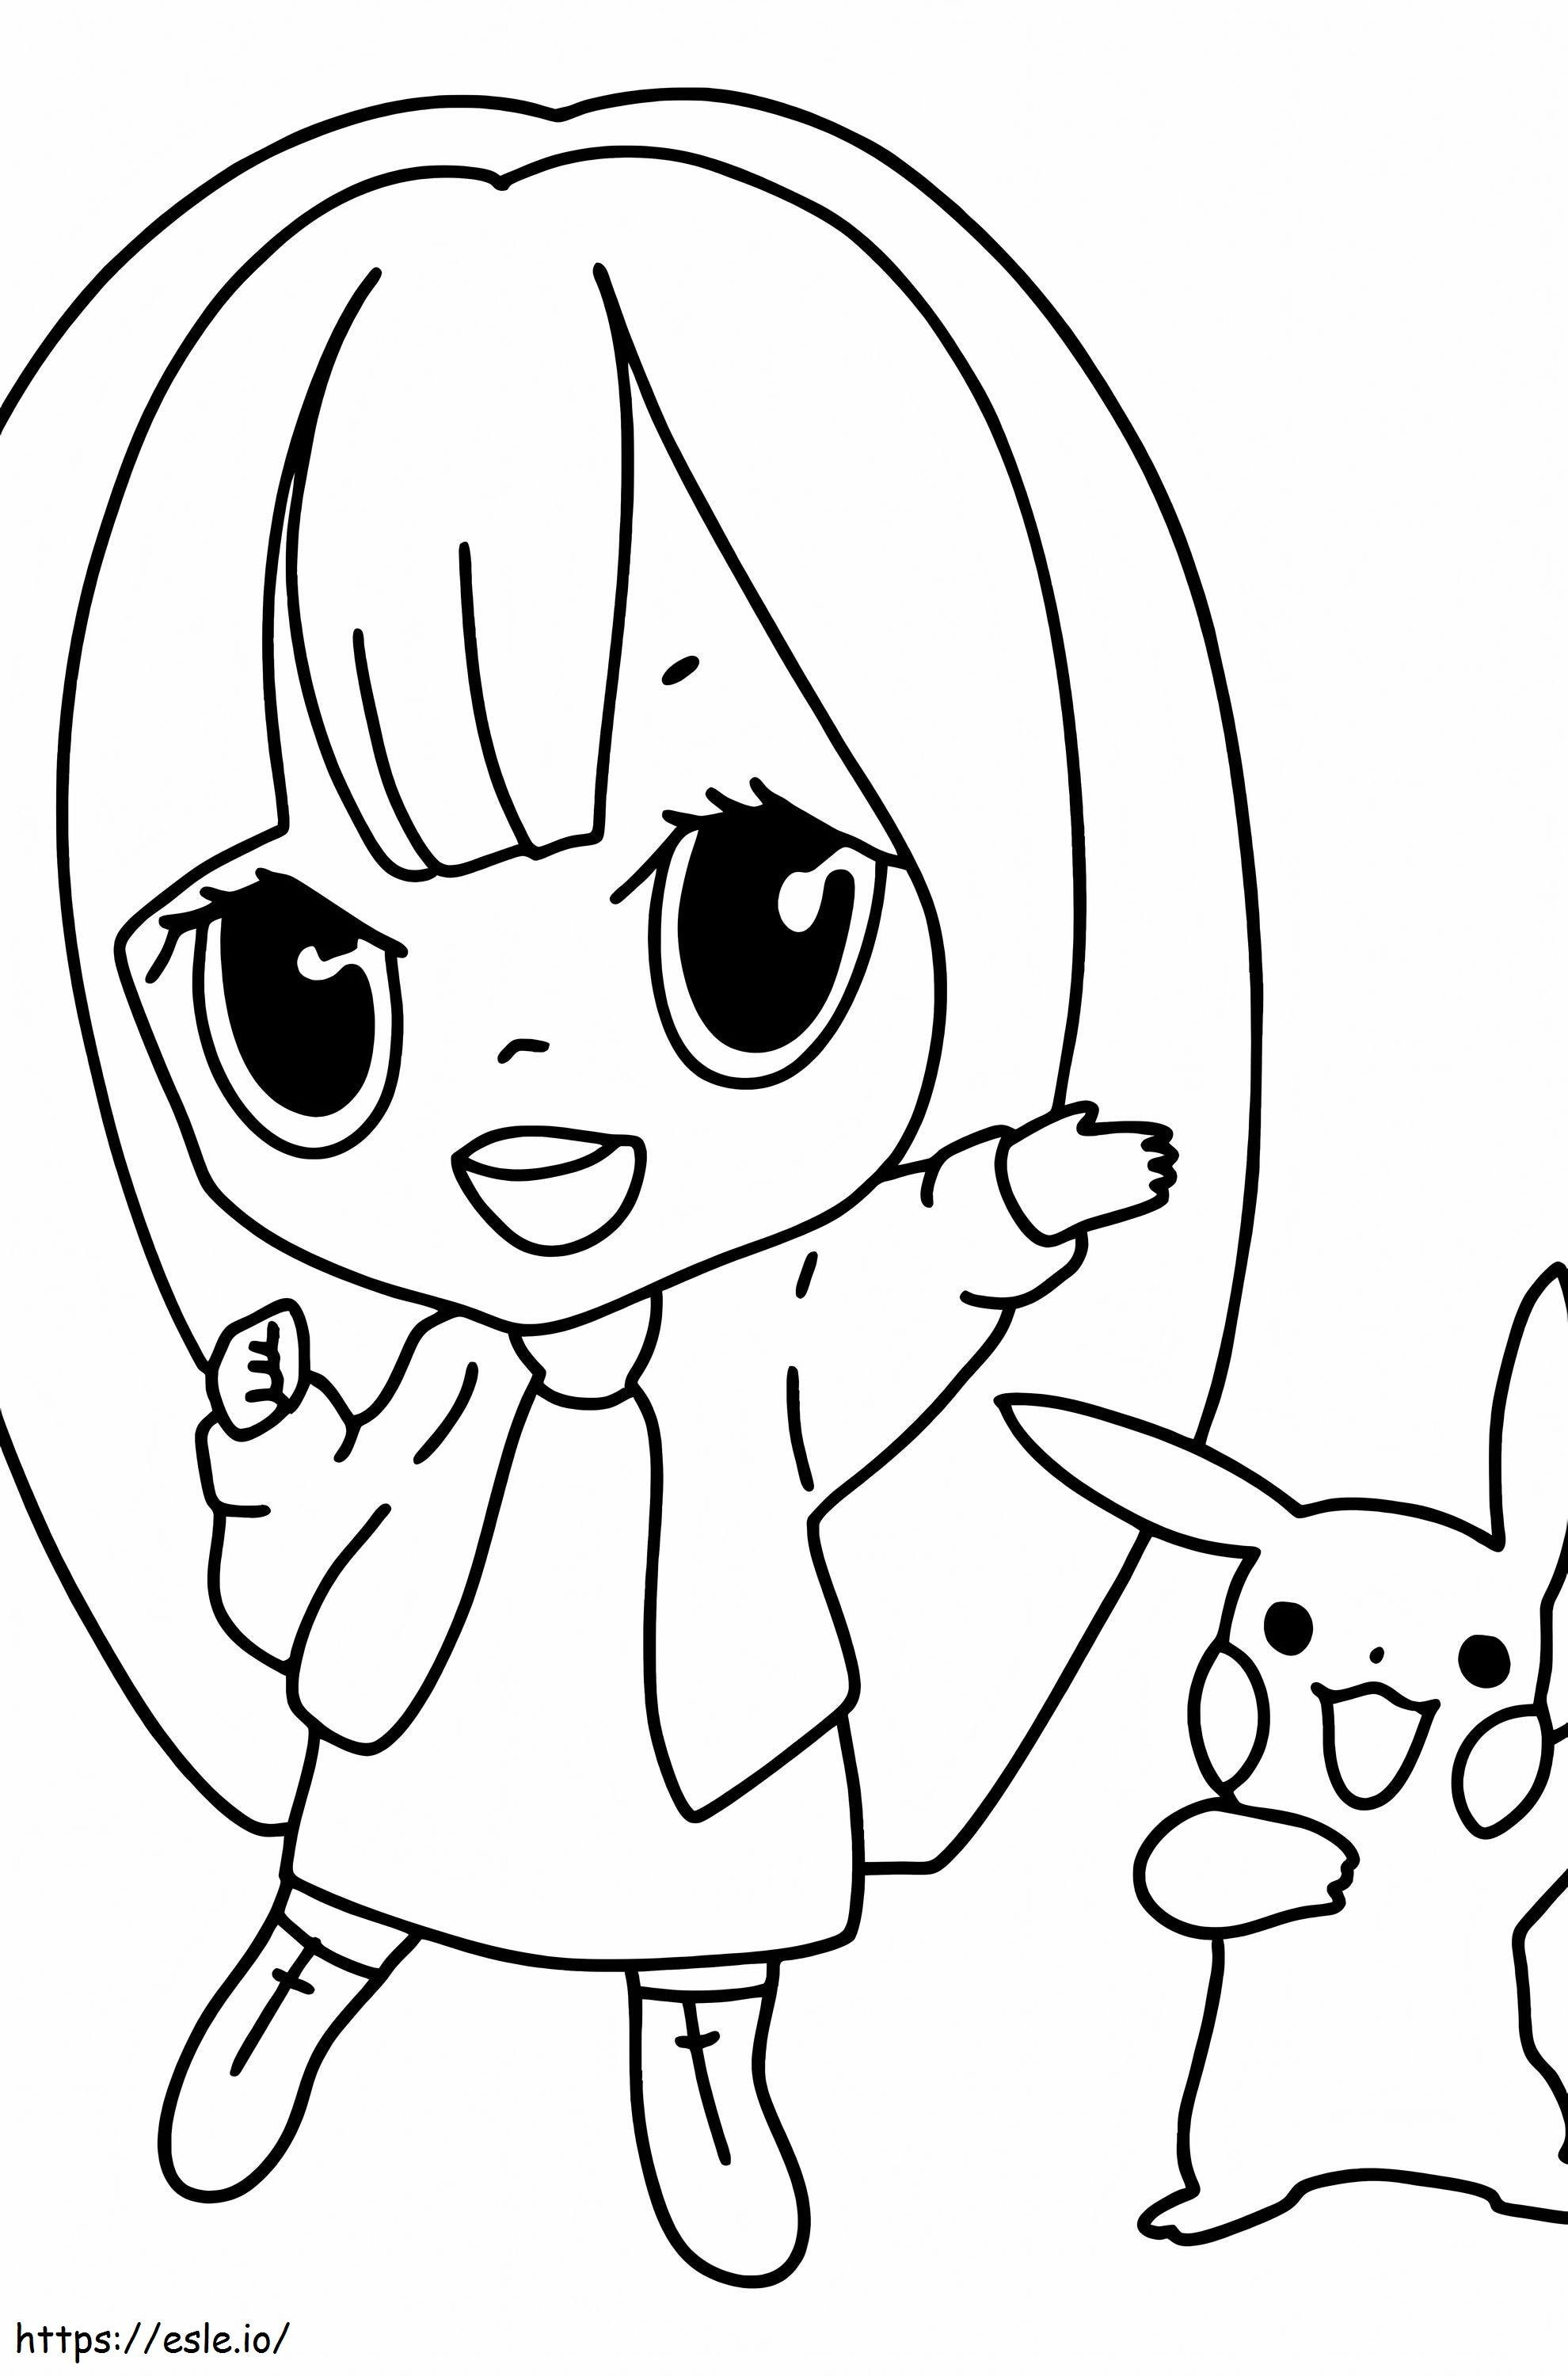 Fire Anime And Pikachu Kawaii coloring page